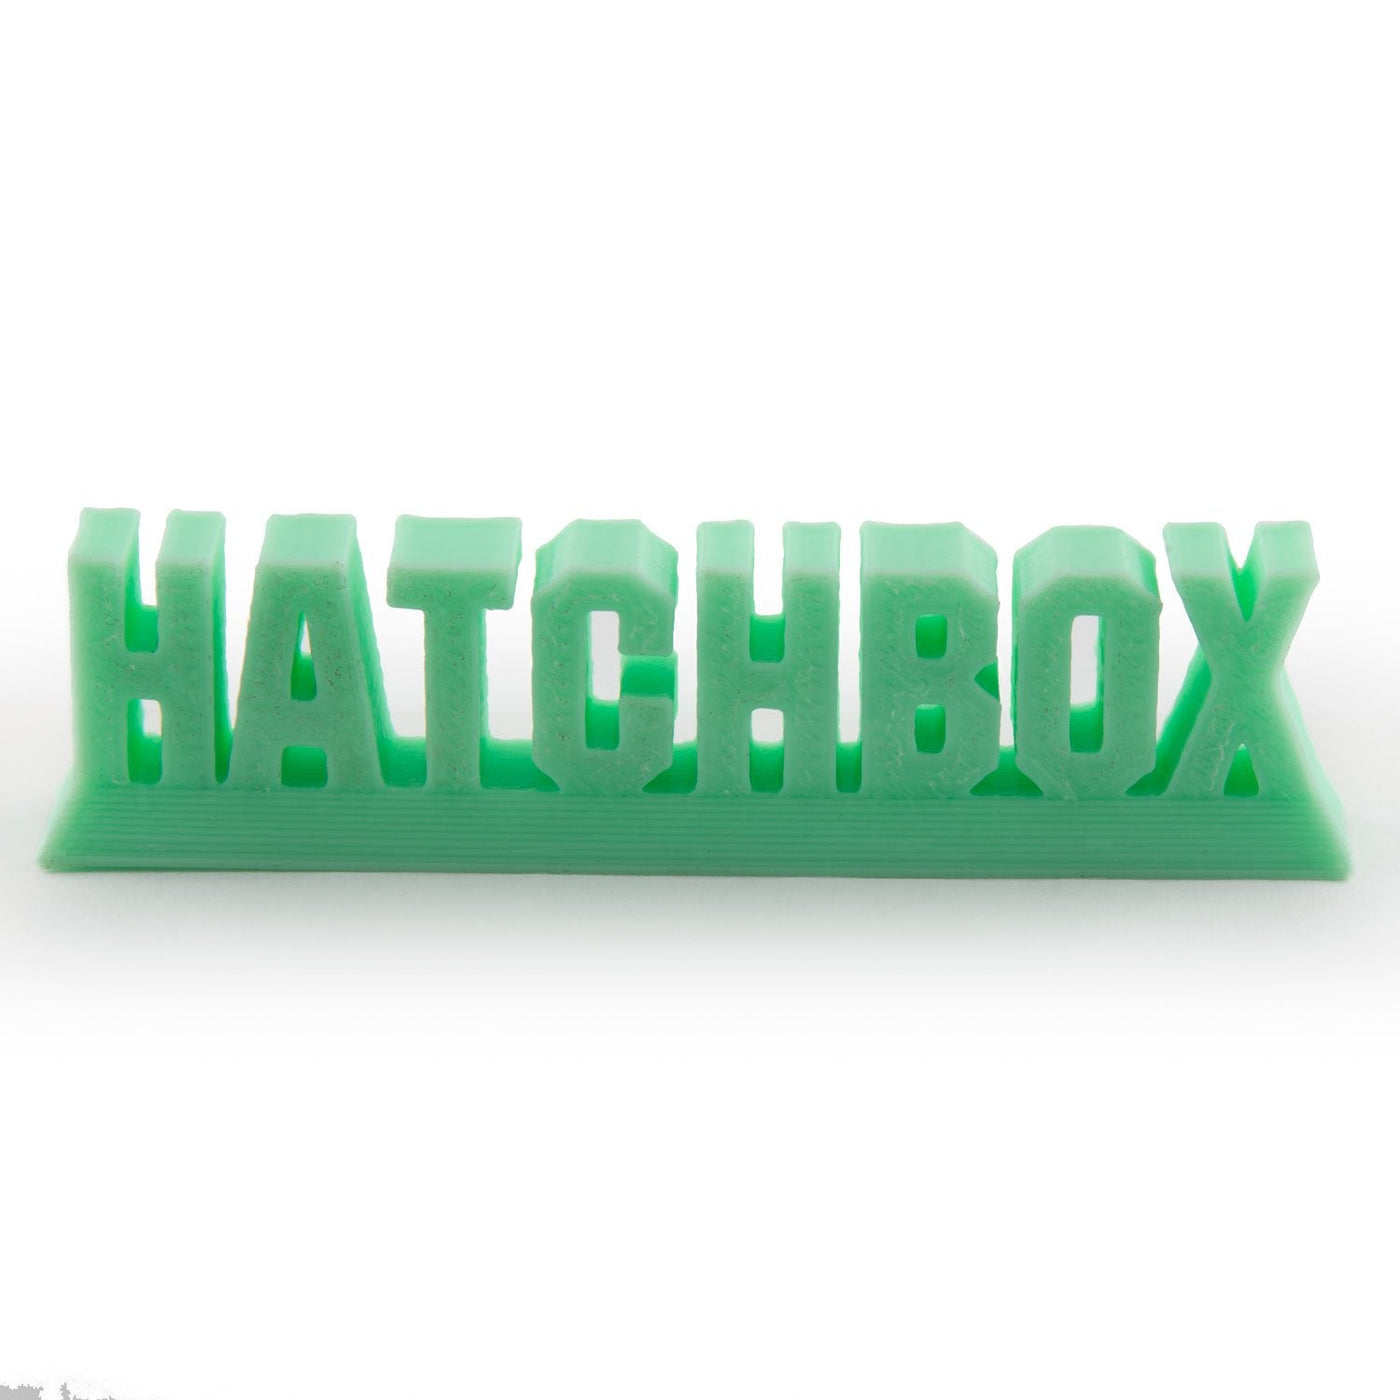 HATCHBOX ABS 1.75 mm 3D Printer Filament in Mint Green, 1kg Spool 